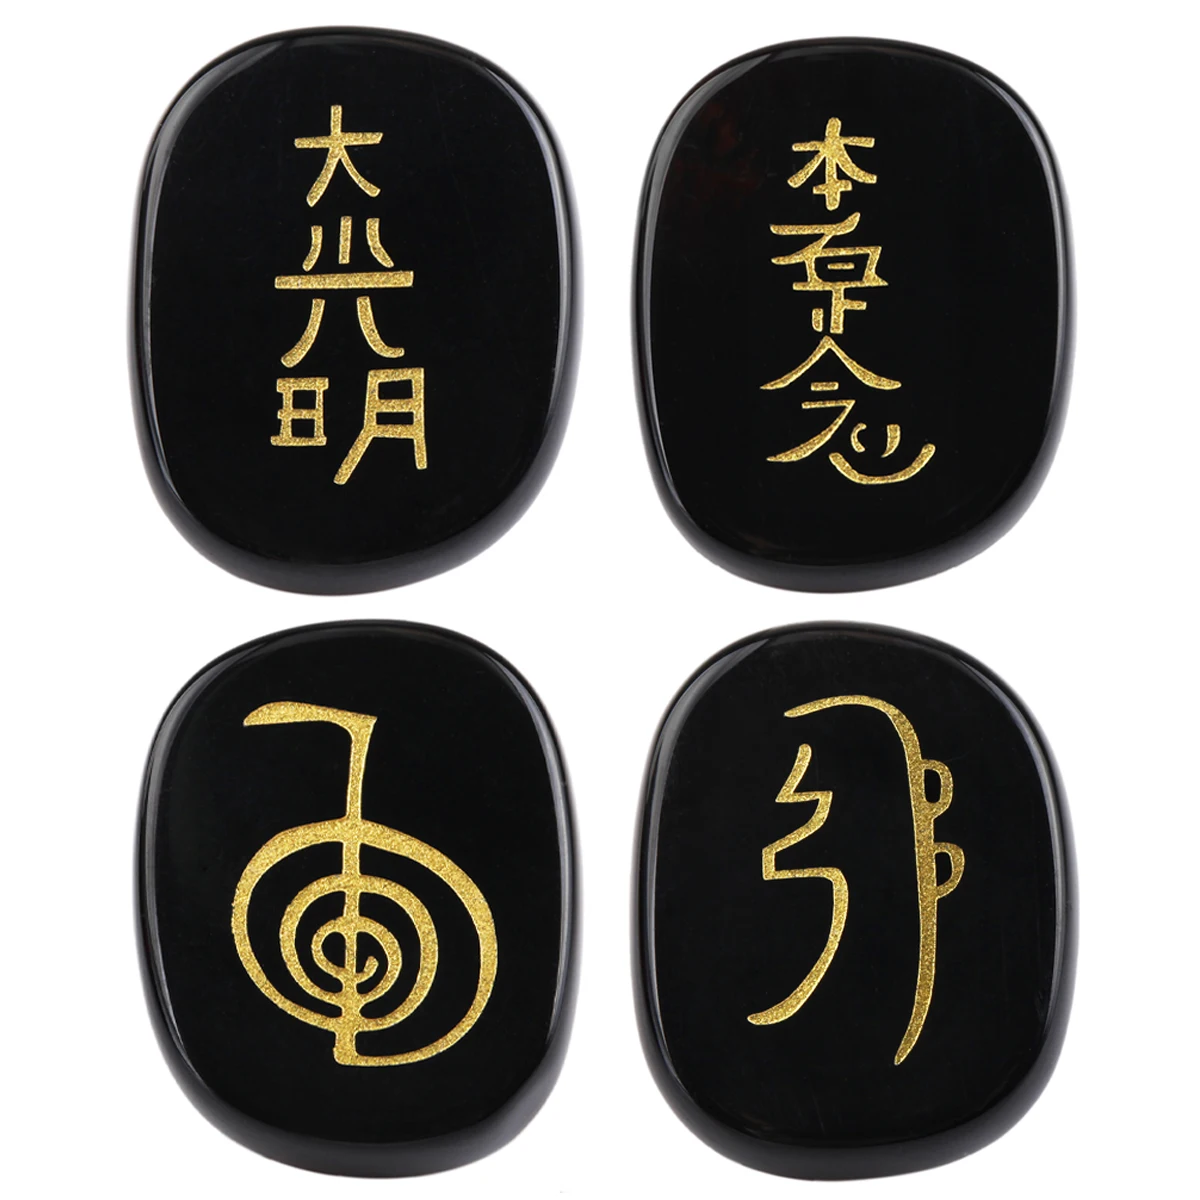 

4pcs/Set Natural Crystal Stone Engraved Chakra Stones Palm Stone For Reiki Balancing Yoga Meditation